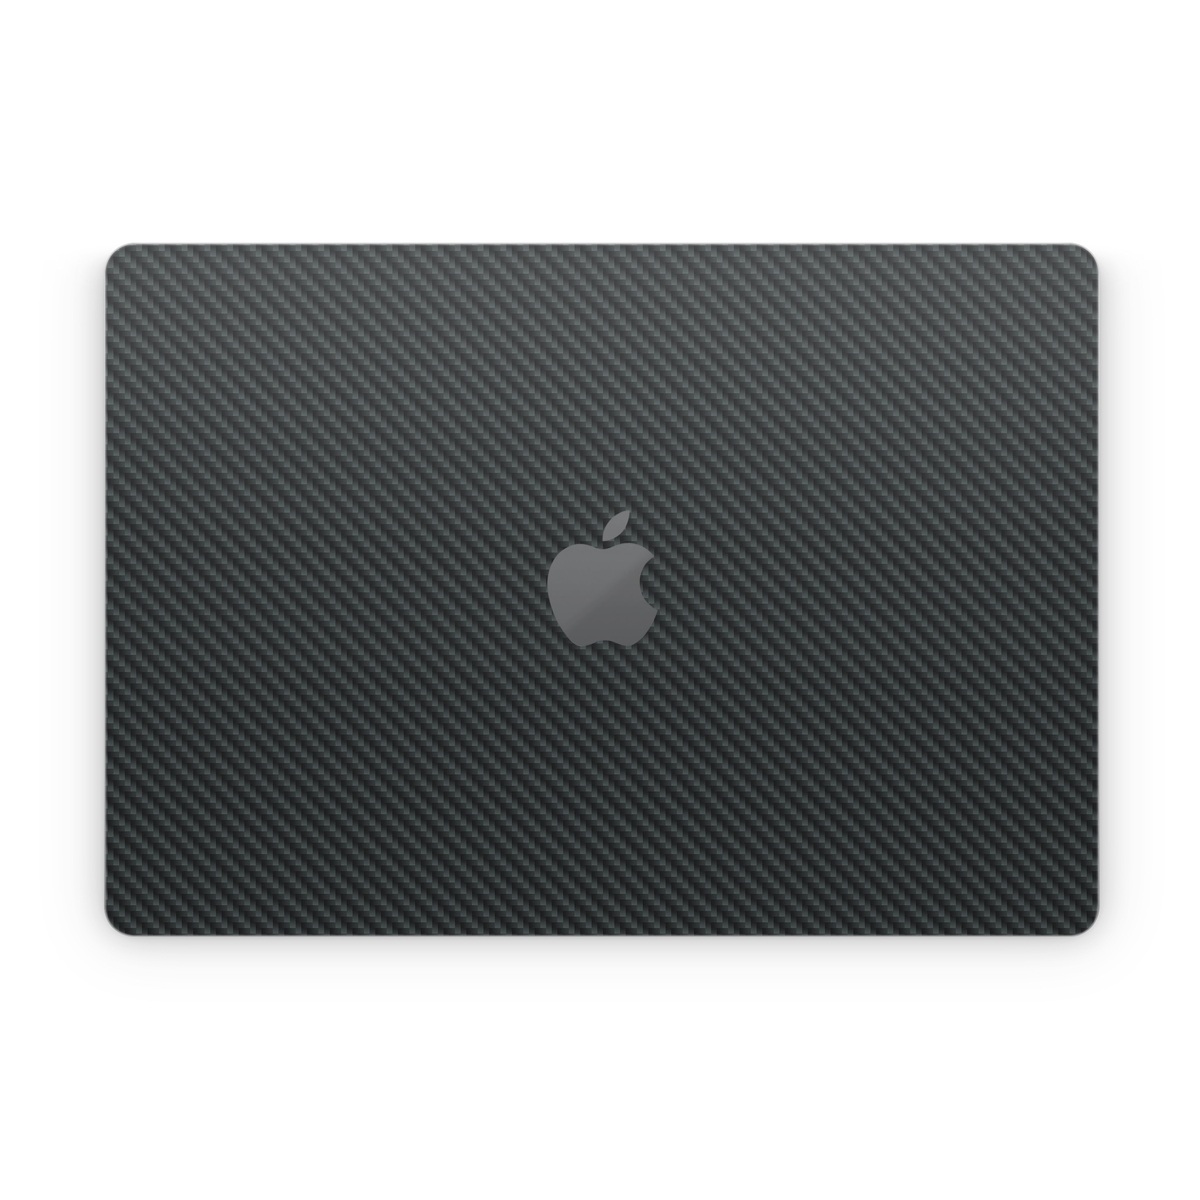 MacBook Skin - Carbon (Image 1)